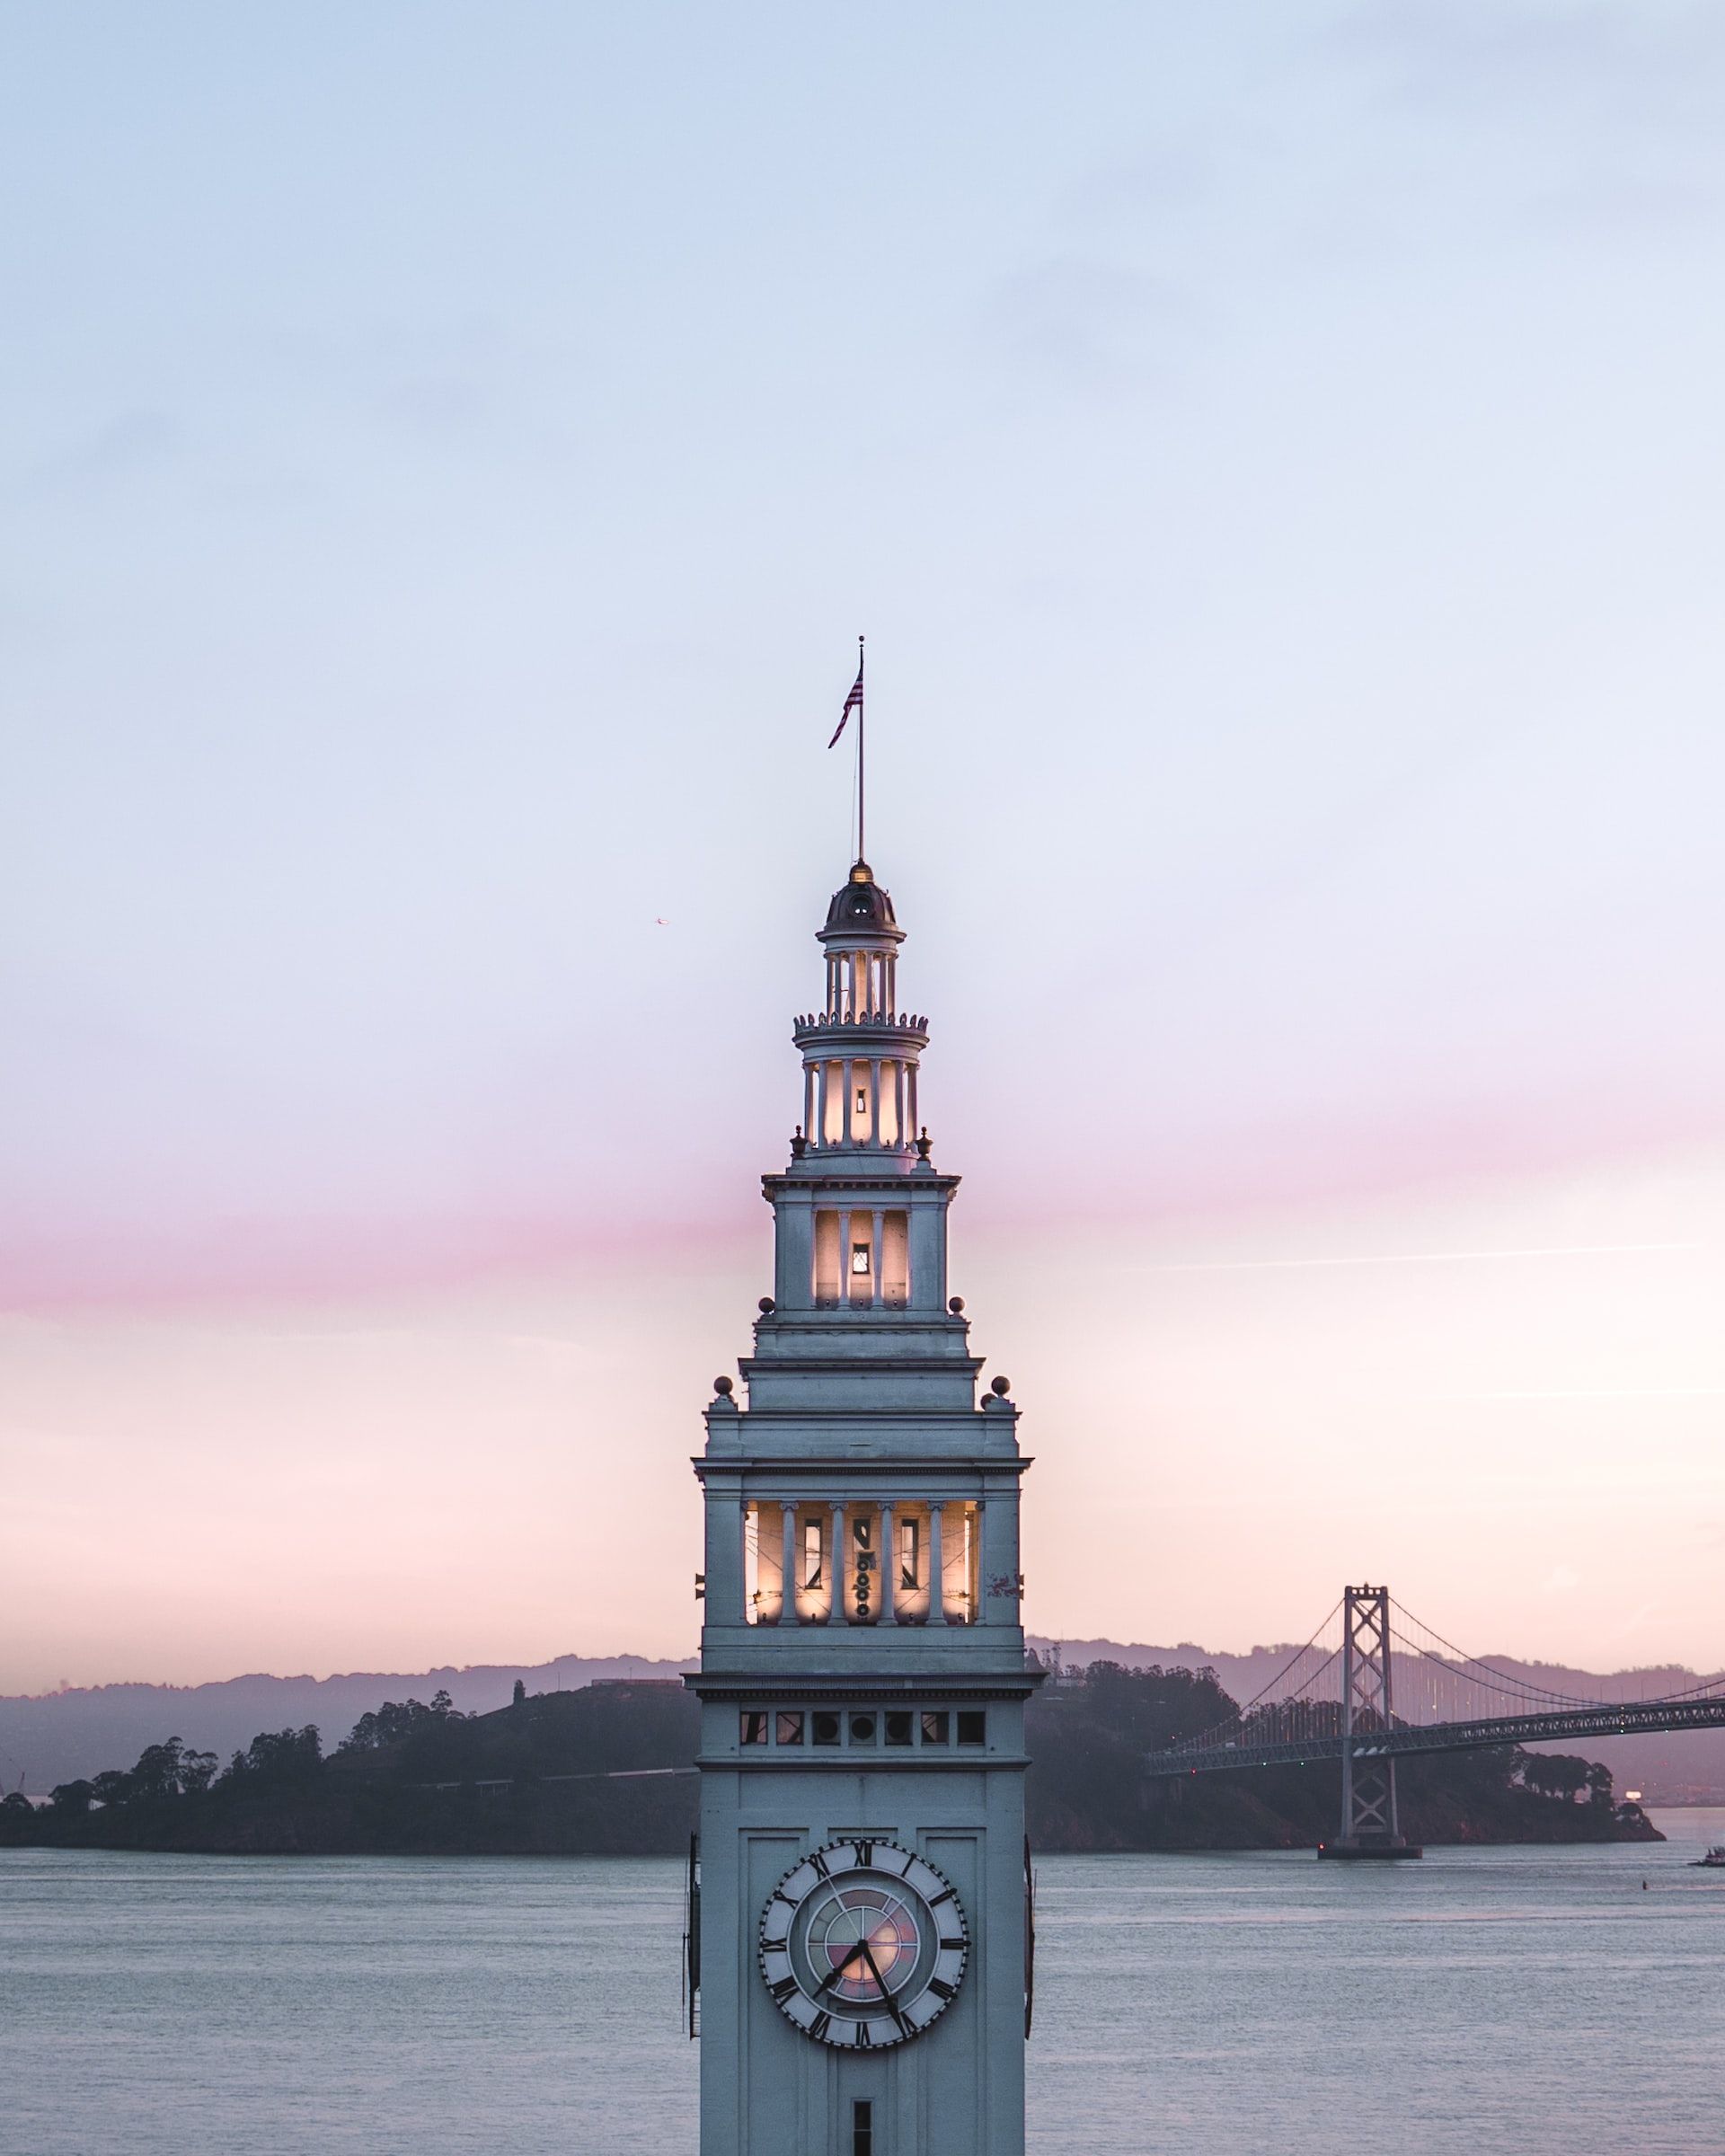 San Francisco Ferry Building clock tower